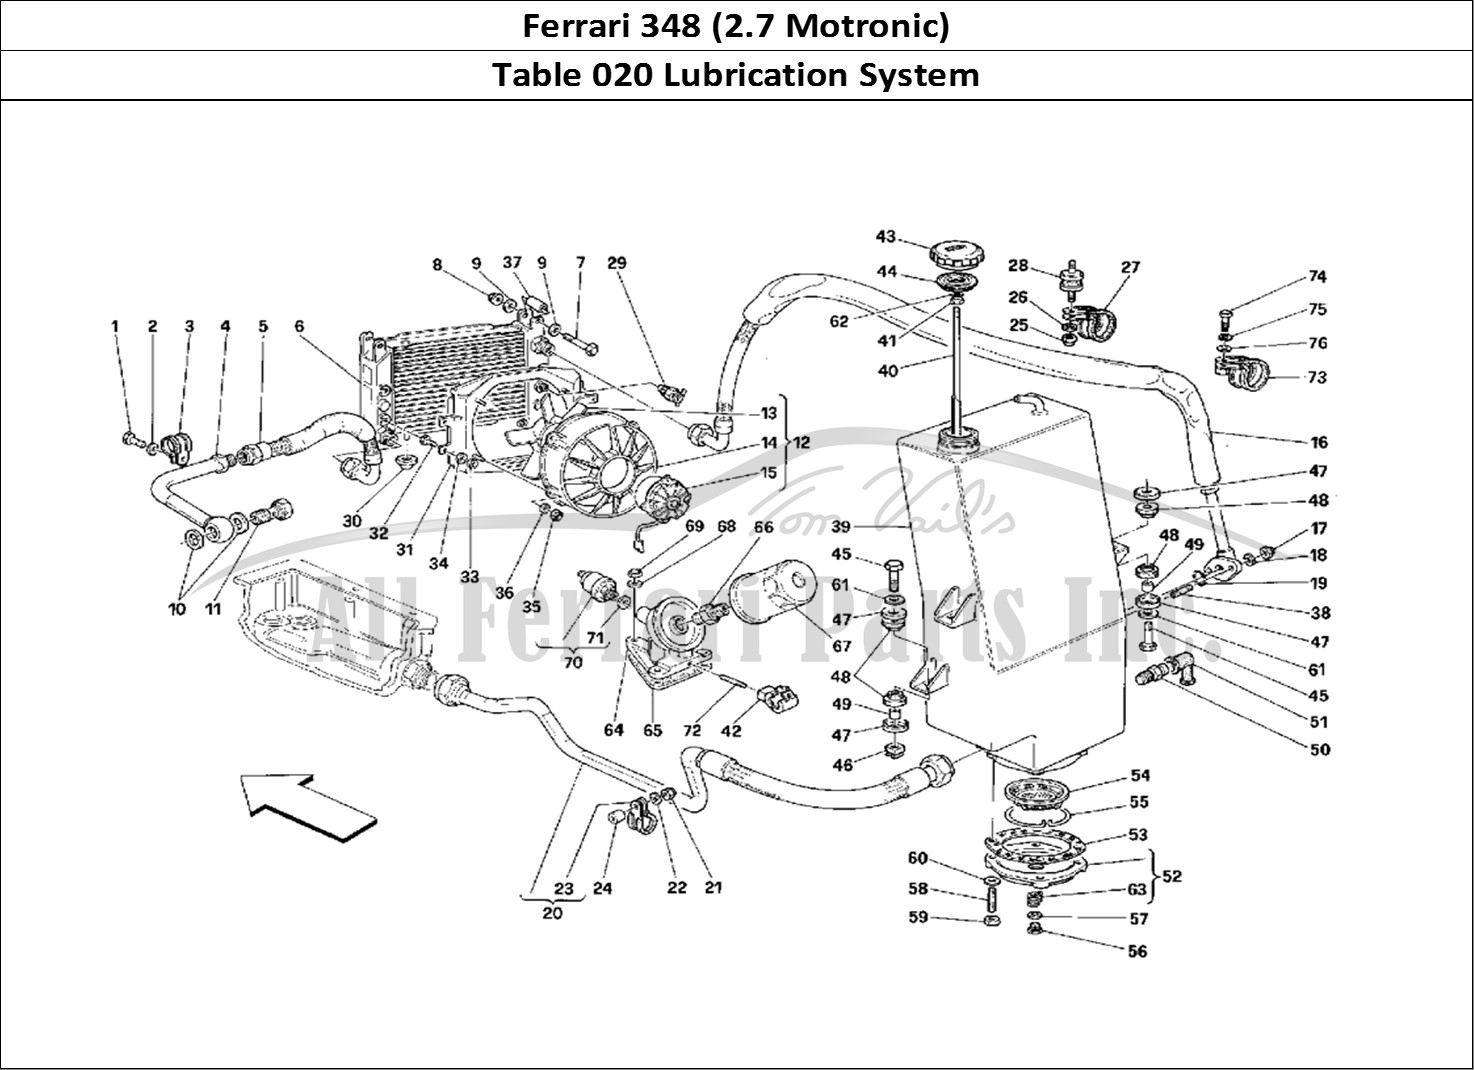 Ferrari Parts Ferrari 348 (2.7 Motronic) Page 020 Lubrication System